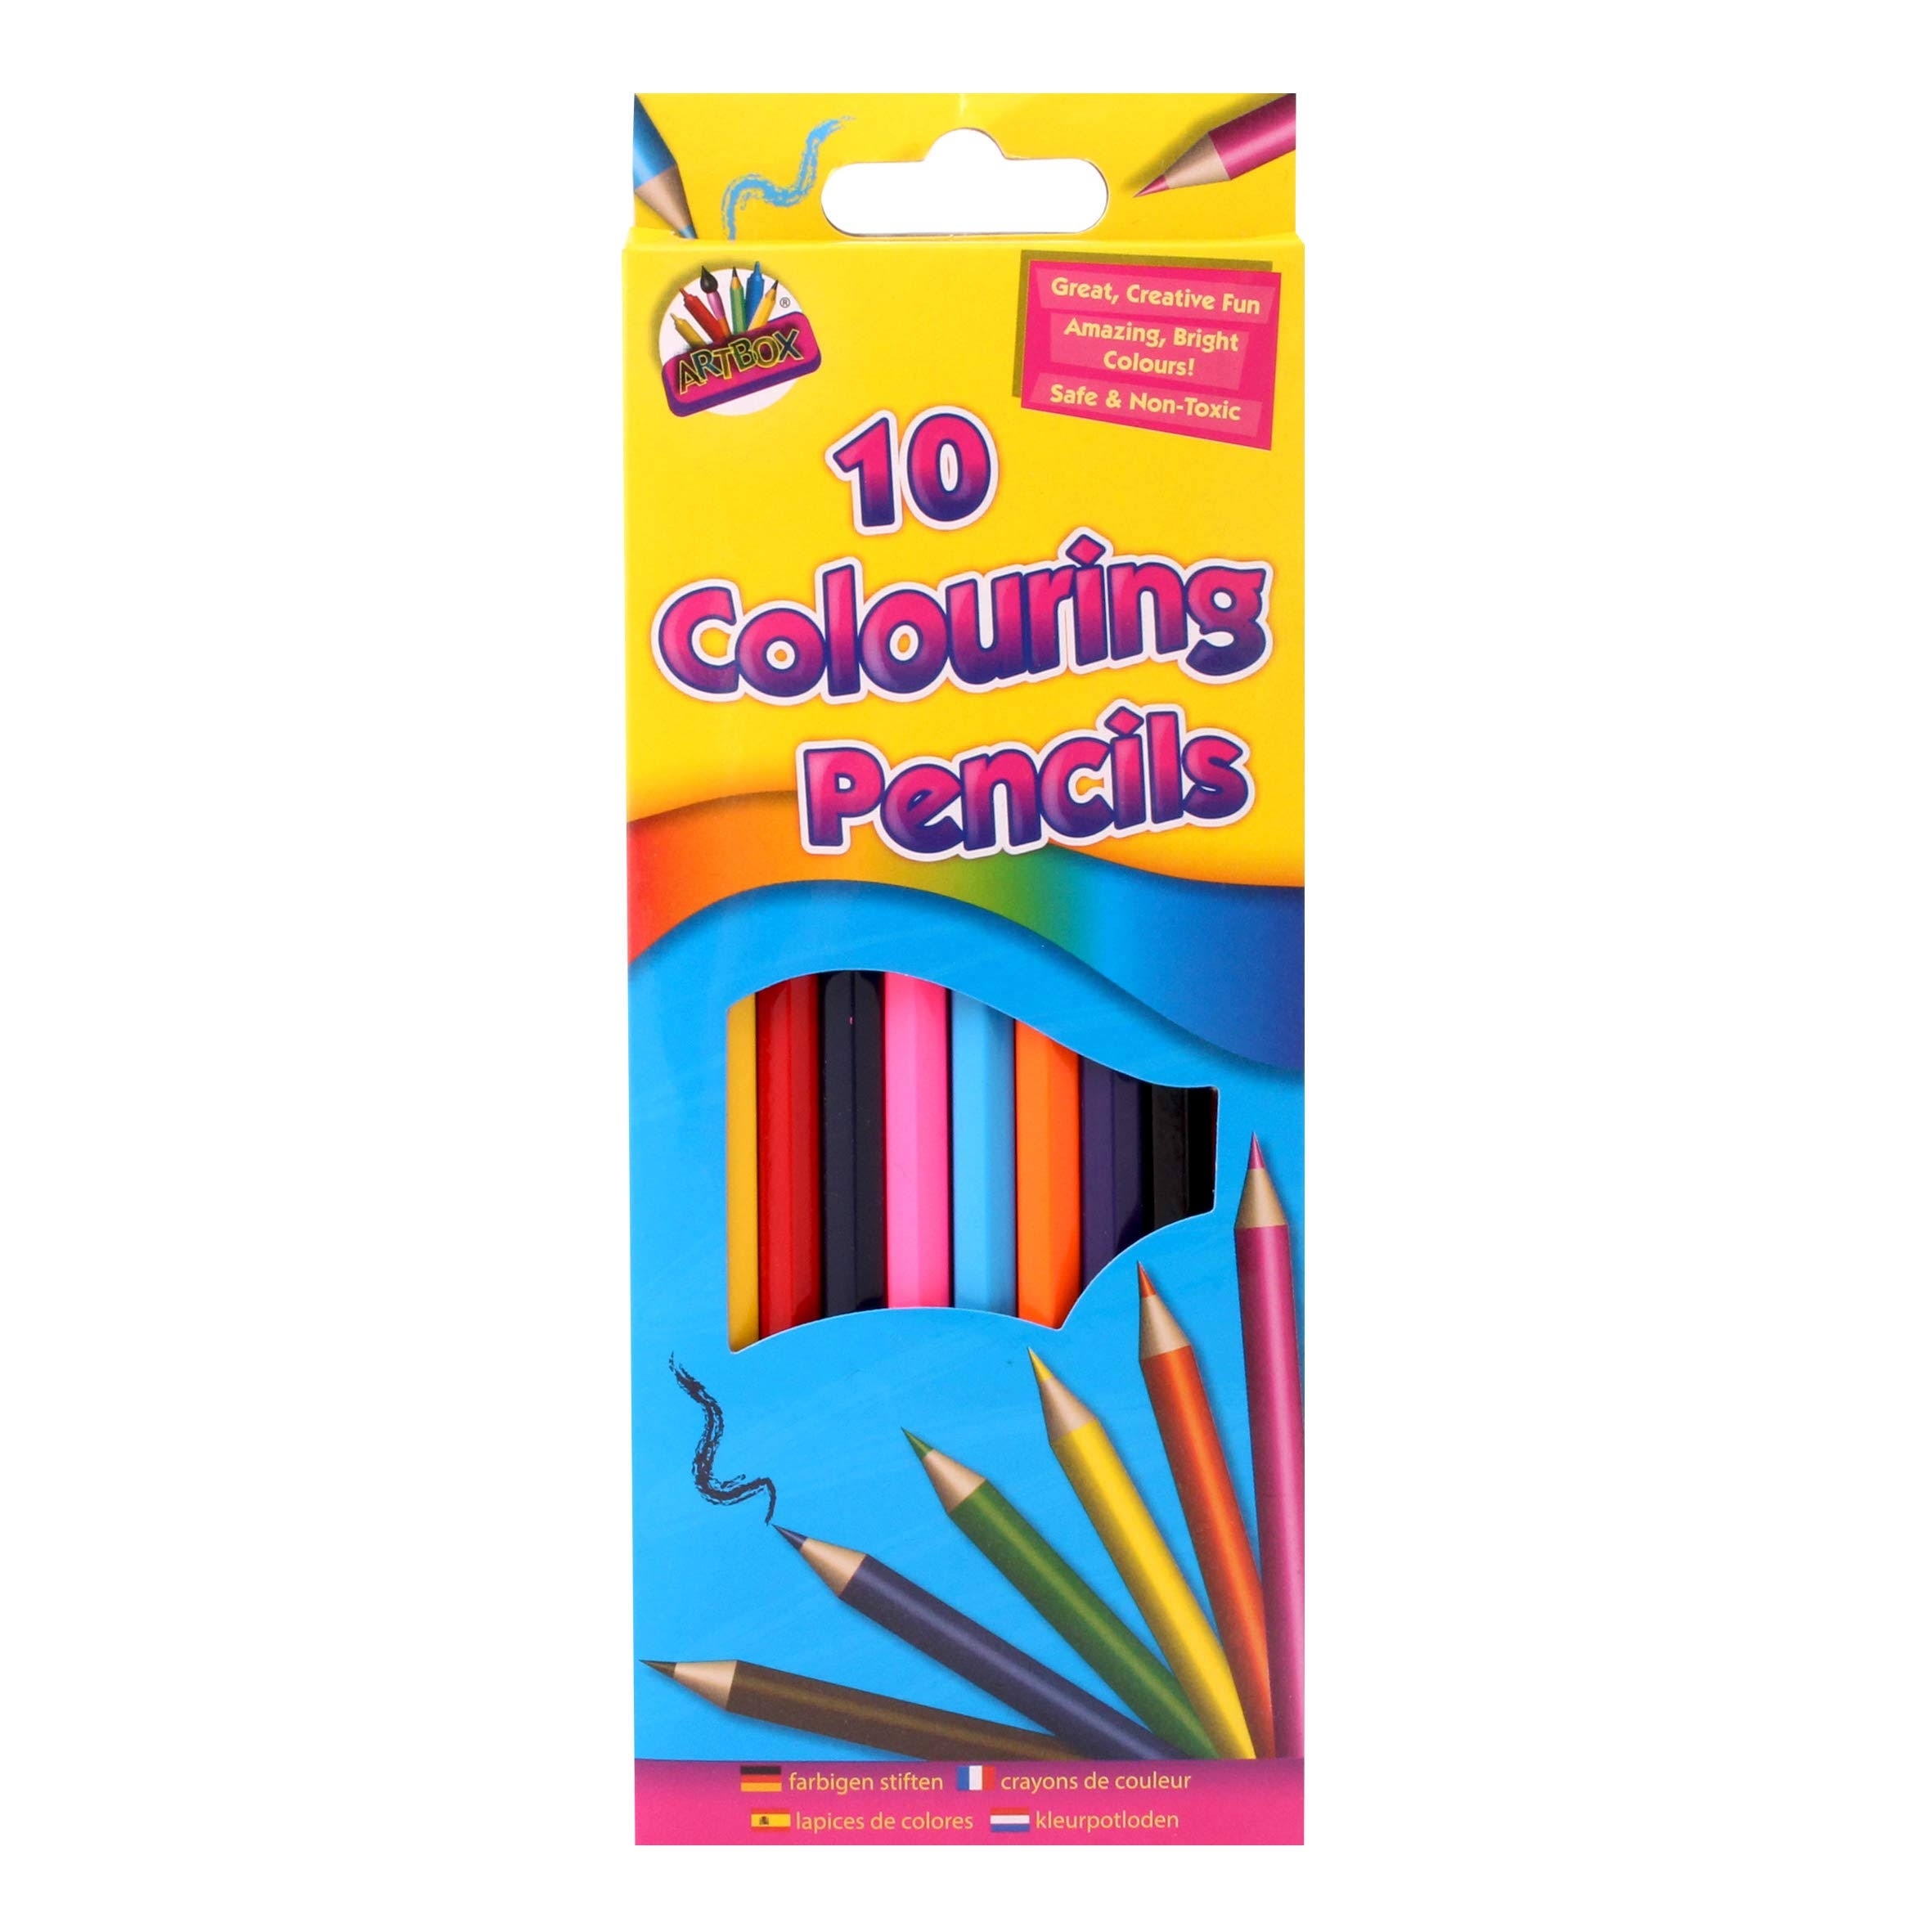 Artbox Colouring Pencils - 10 Pack